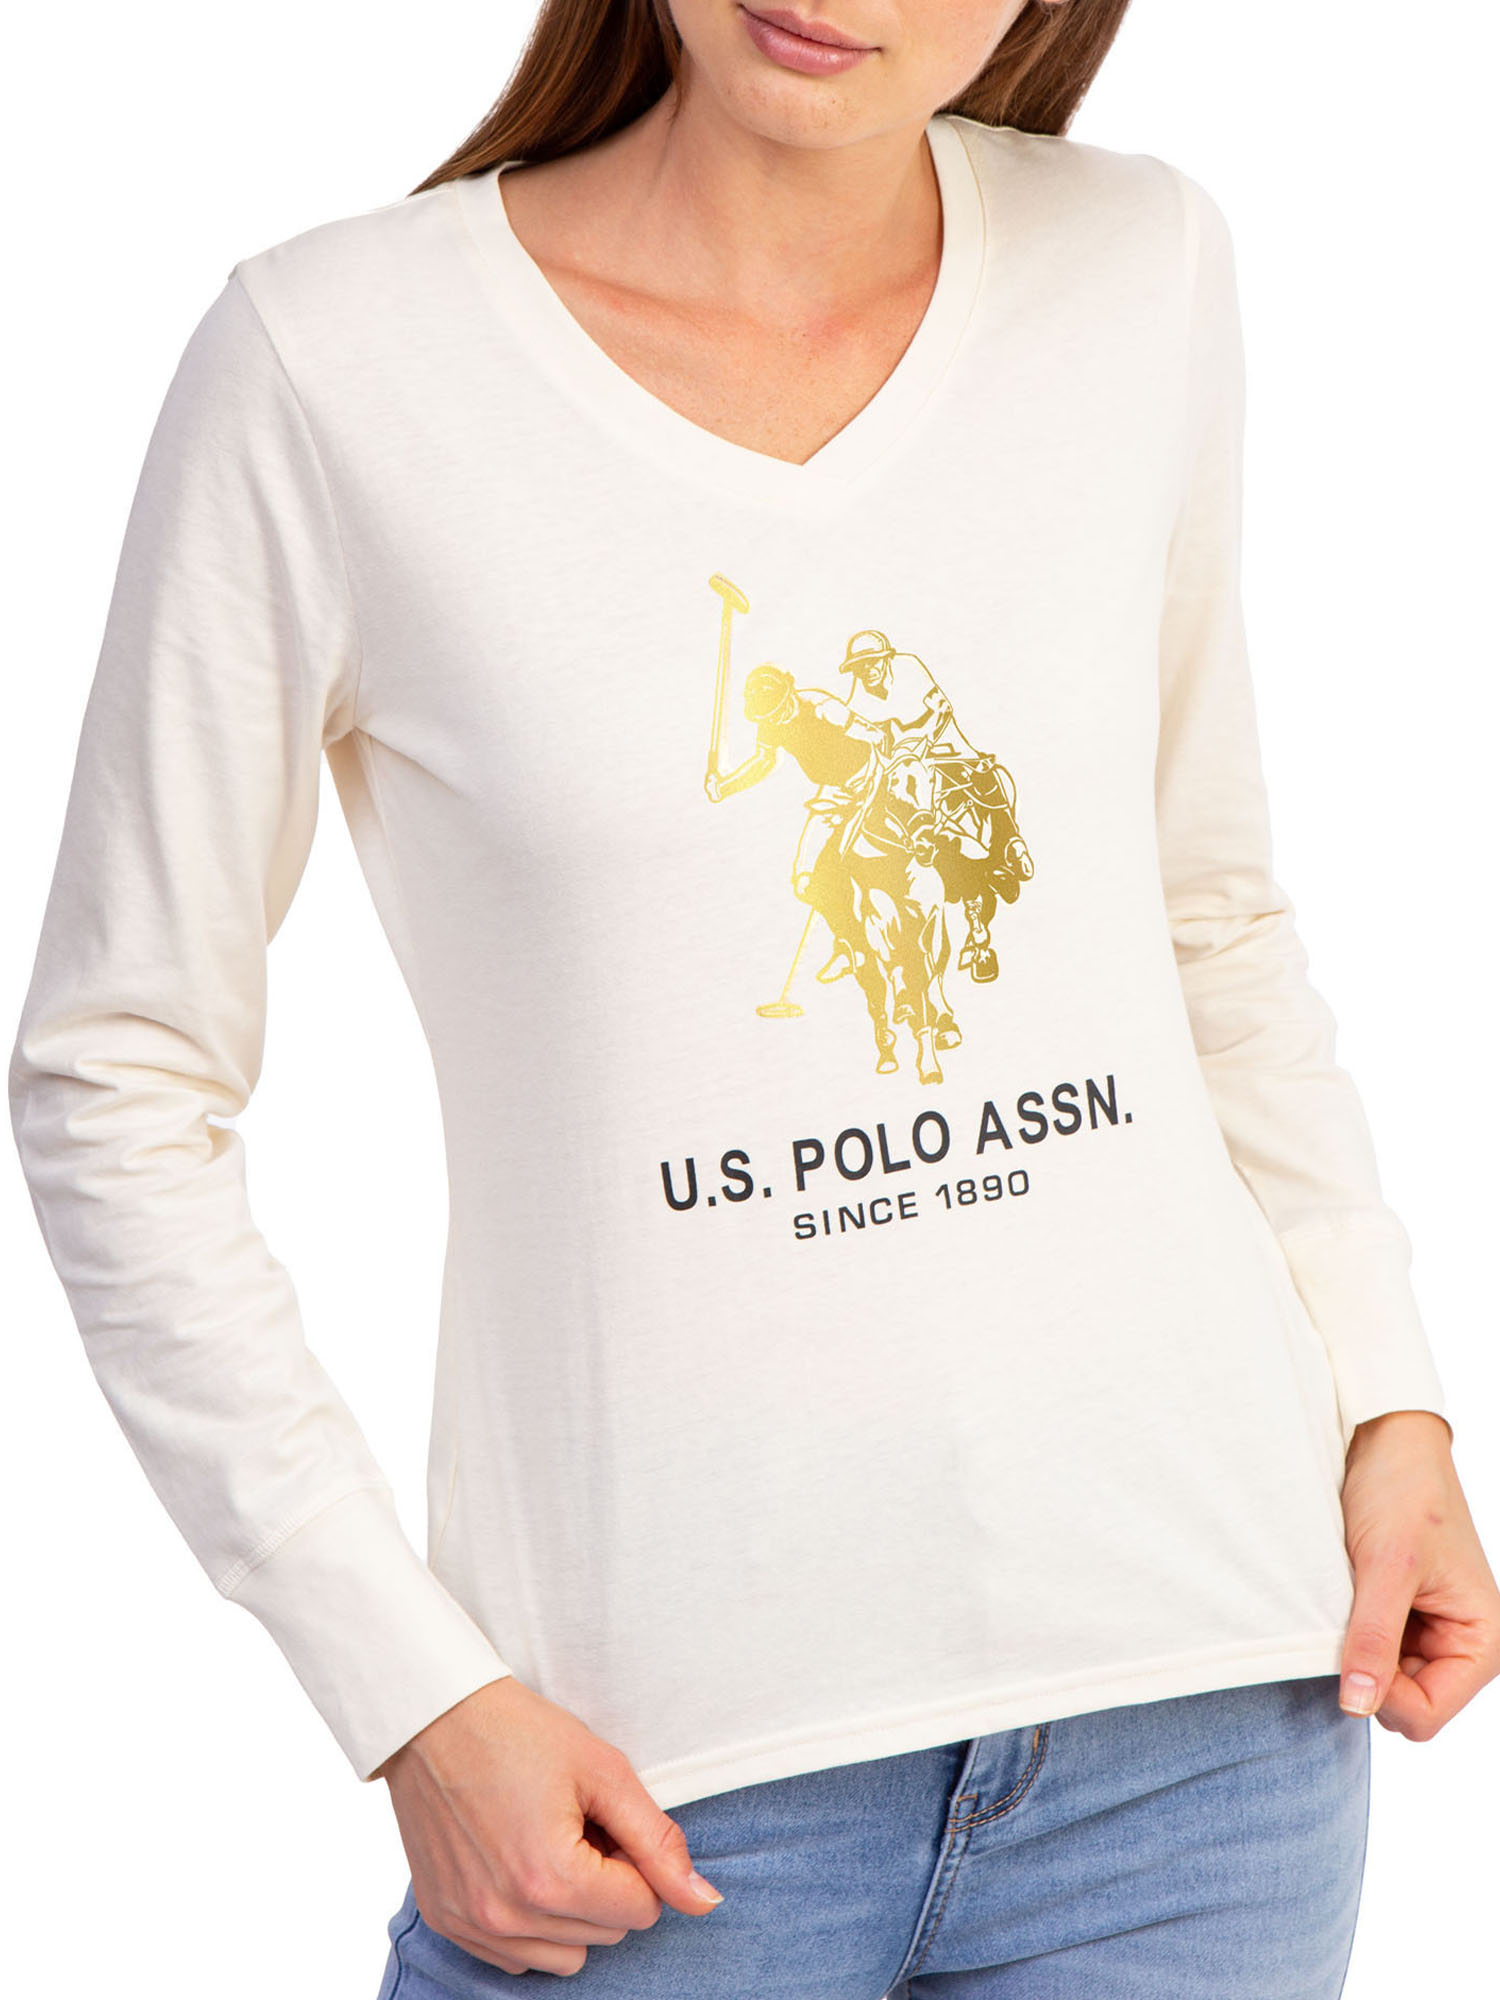 U.S. Polo Assn. Womens' Long Sleeve Graphic Jersey T Shirt - image 4 of 4